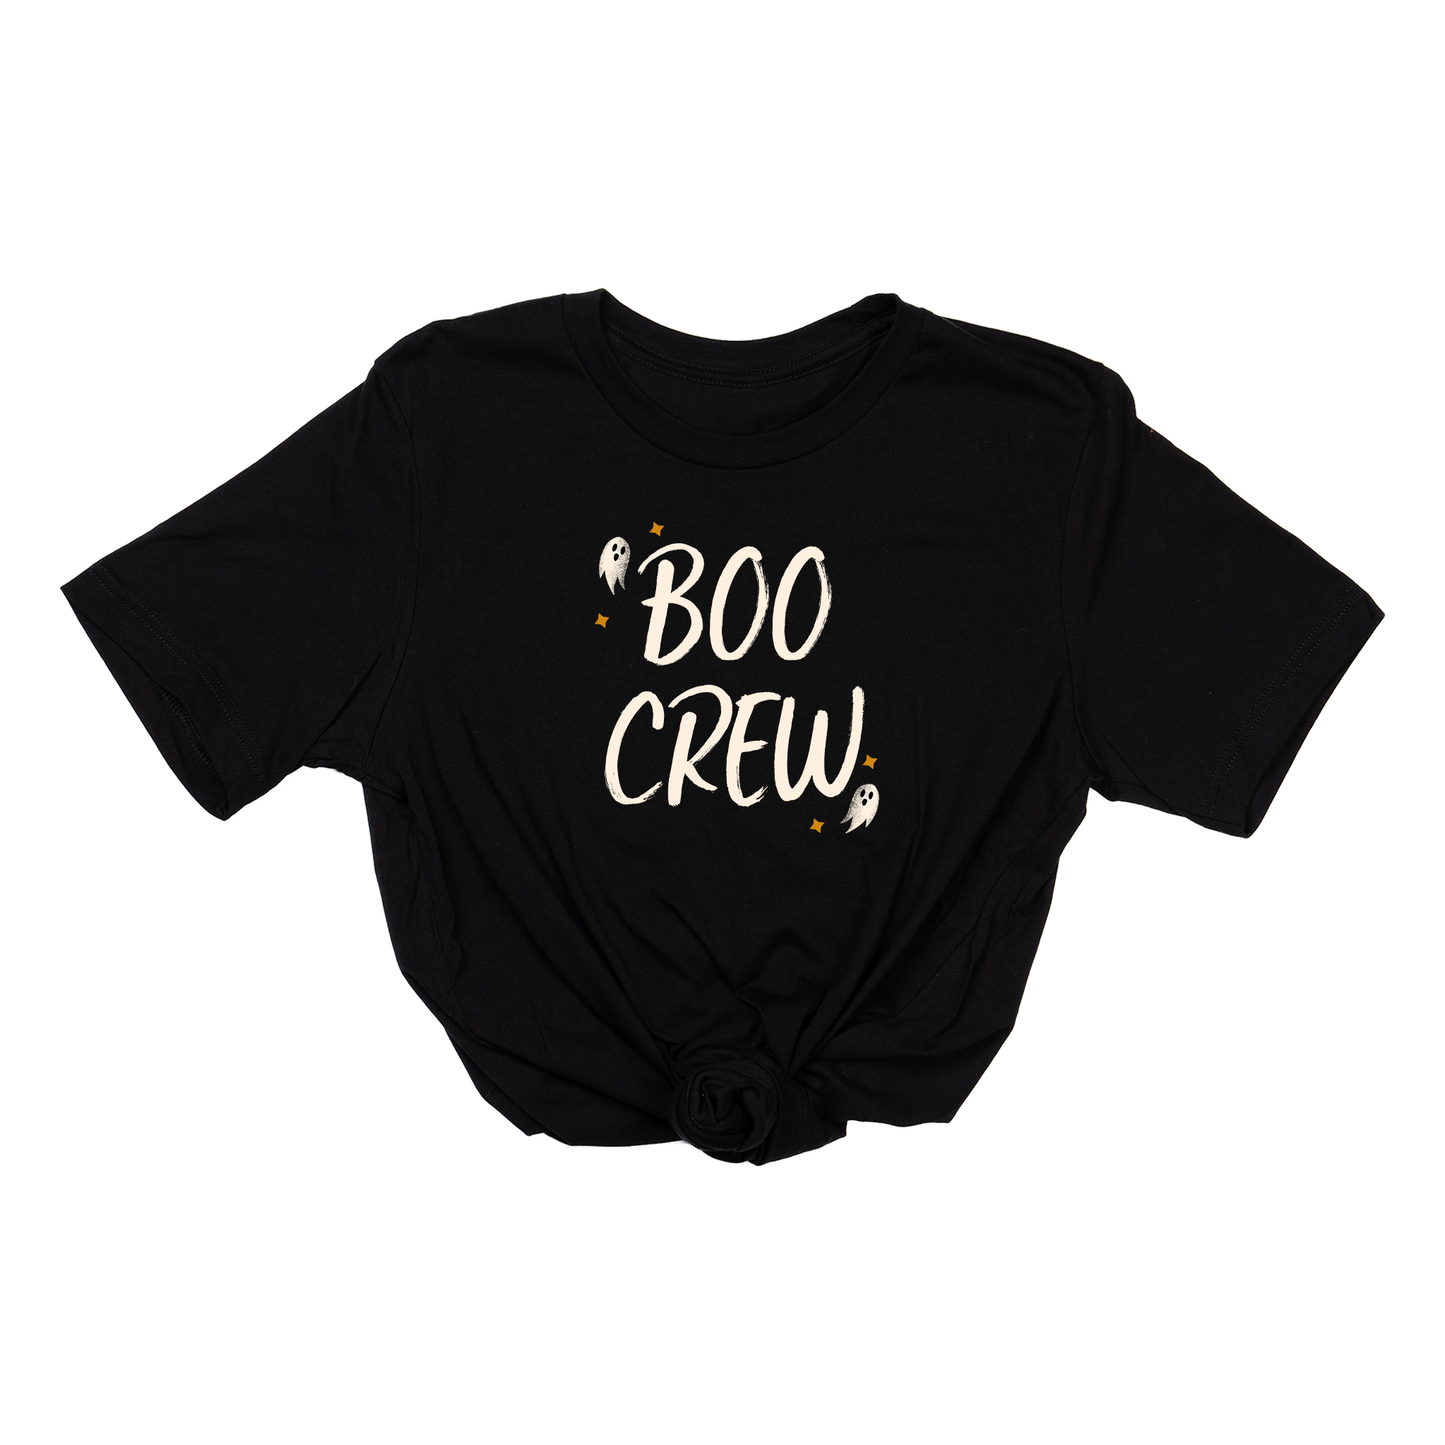 BOO CREW (Off White) - Tee (Black)